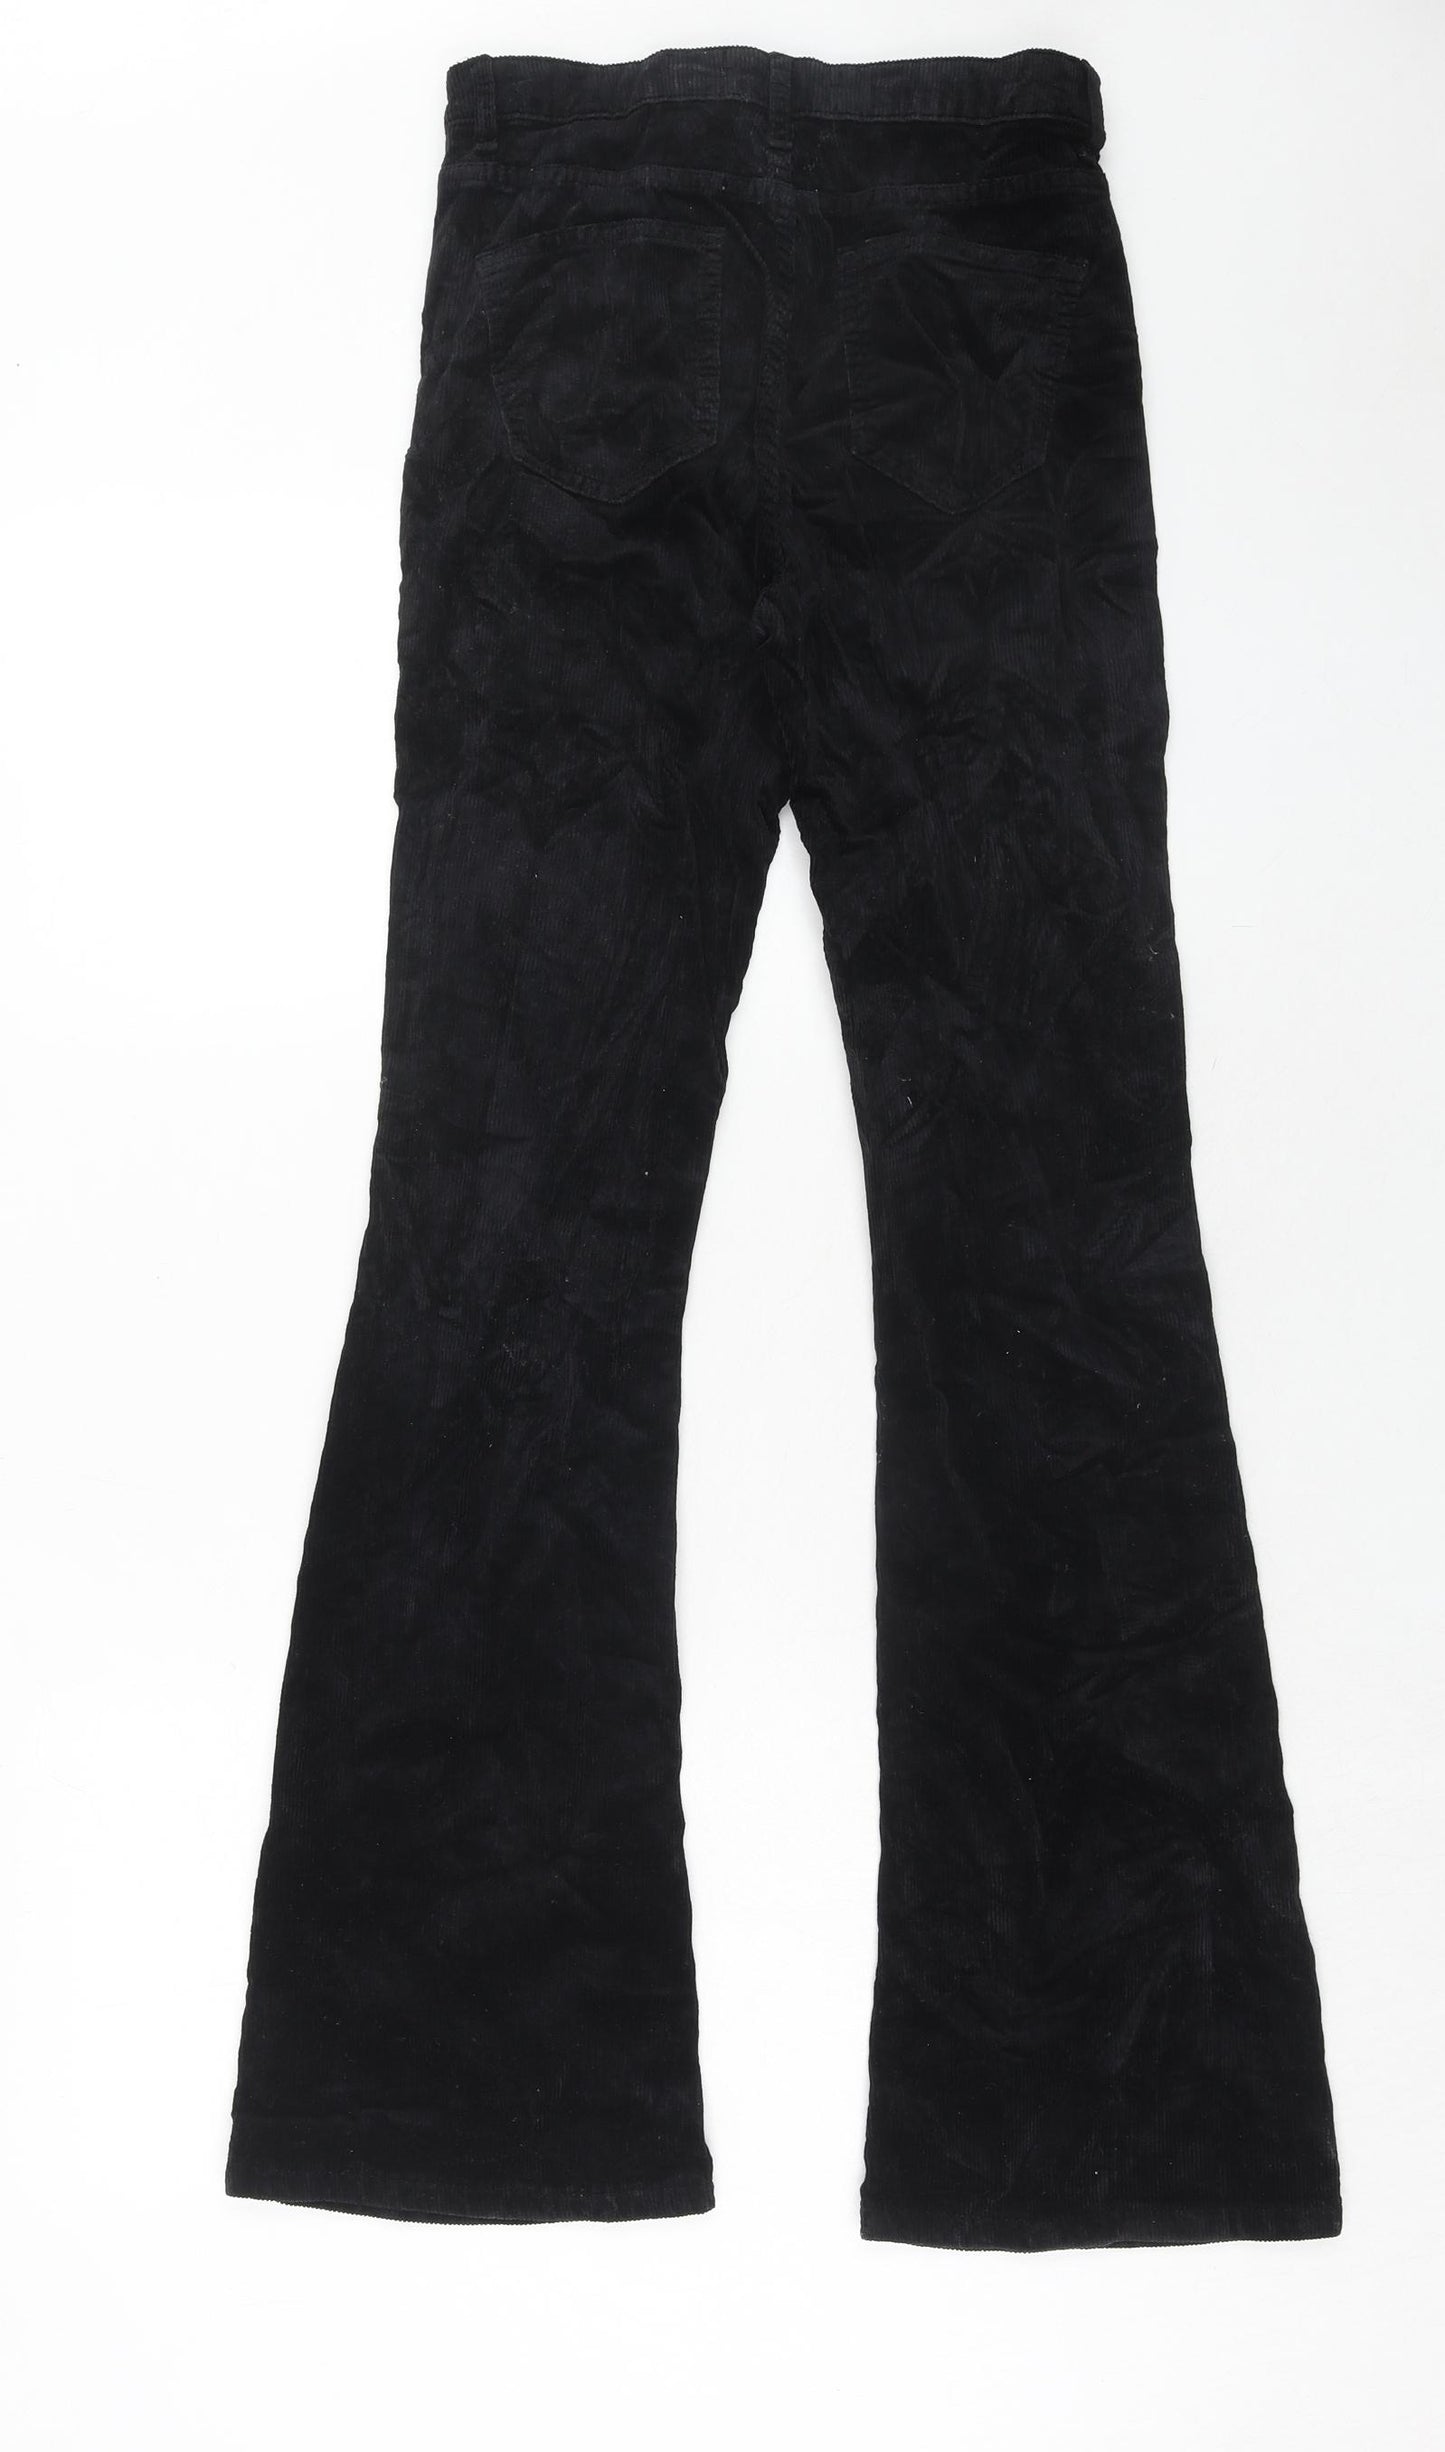 Zara Womens Black Cotton Trousers Size 6 Regular Zip